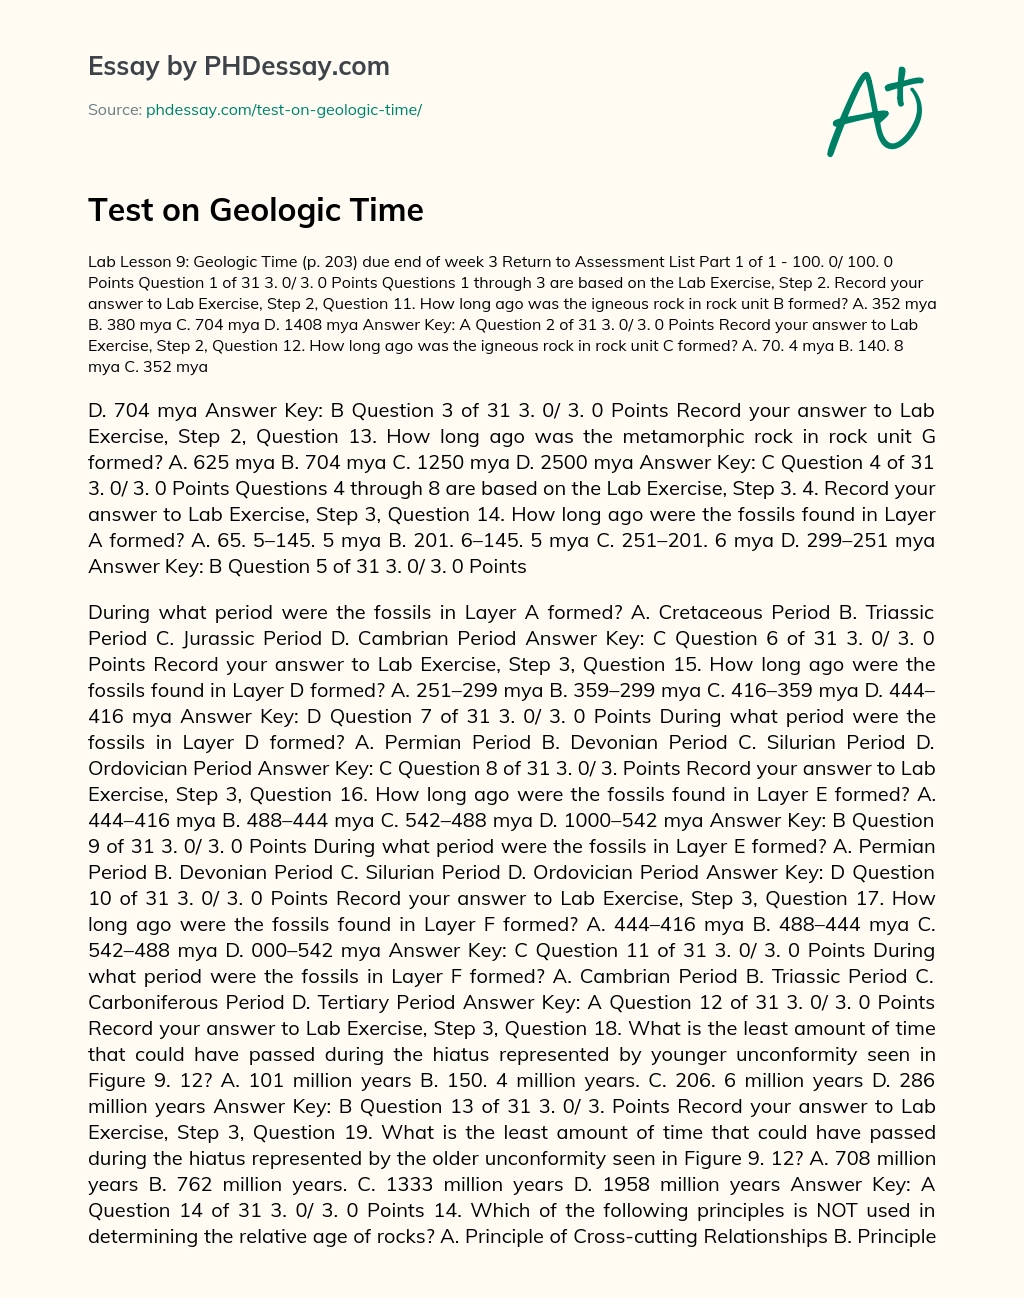 Test on Geologic Time essay